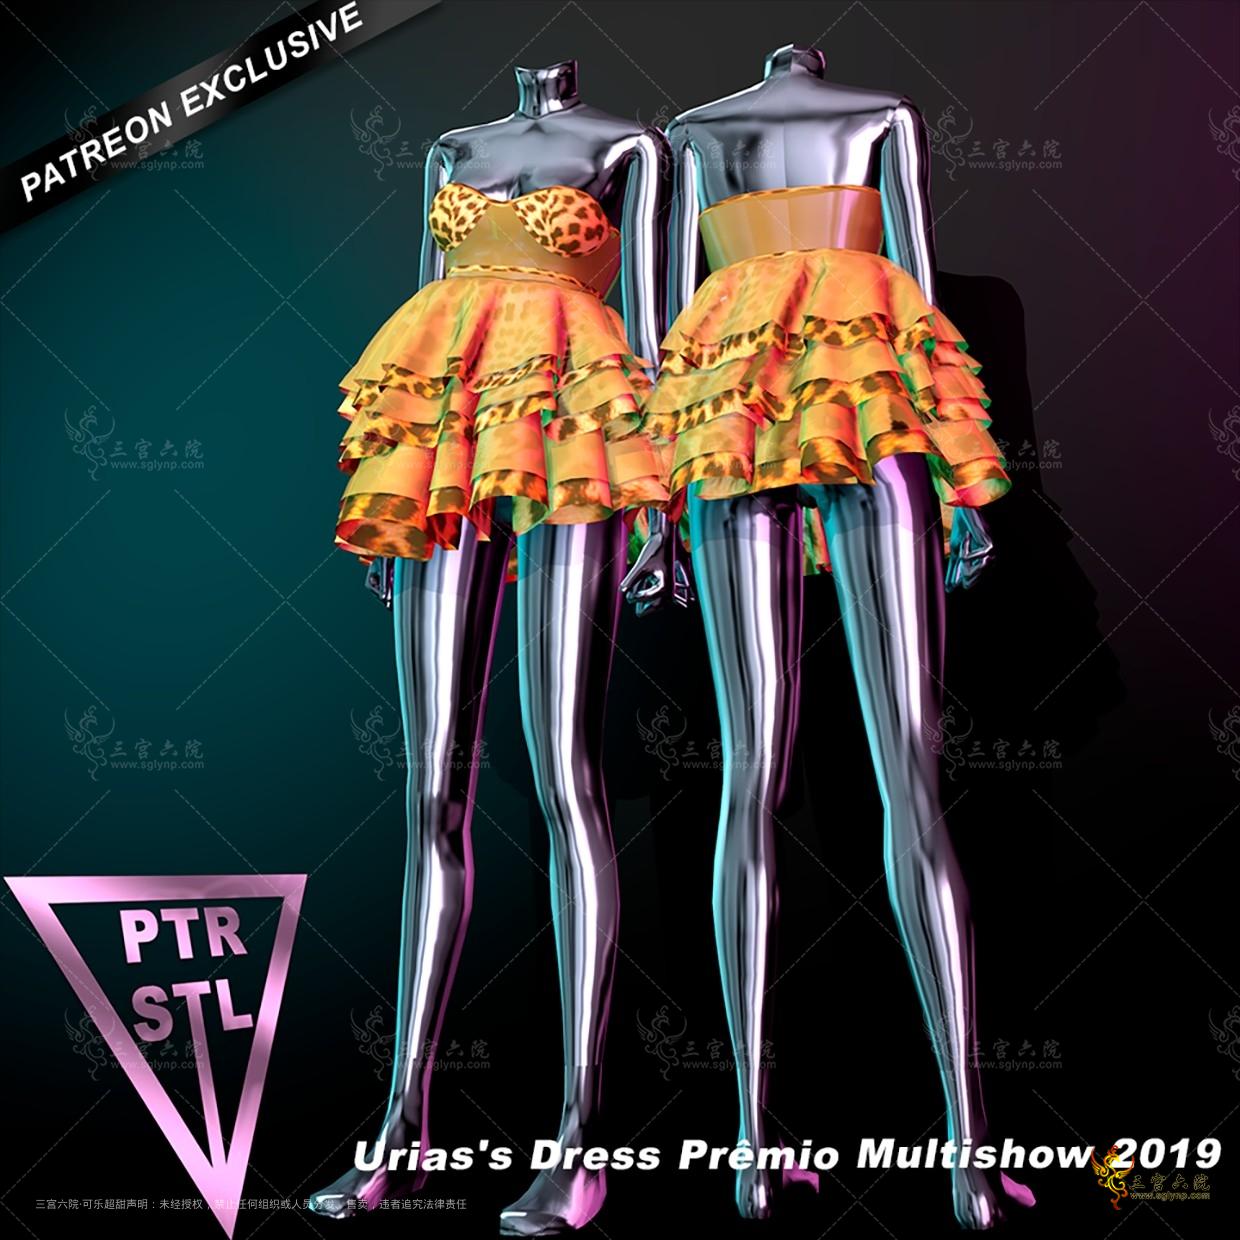 Pietro's Style Urias's Dress Premio Multishow 2019.png